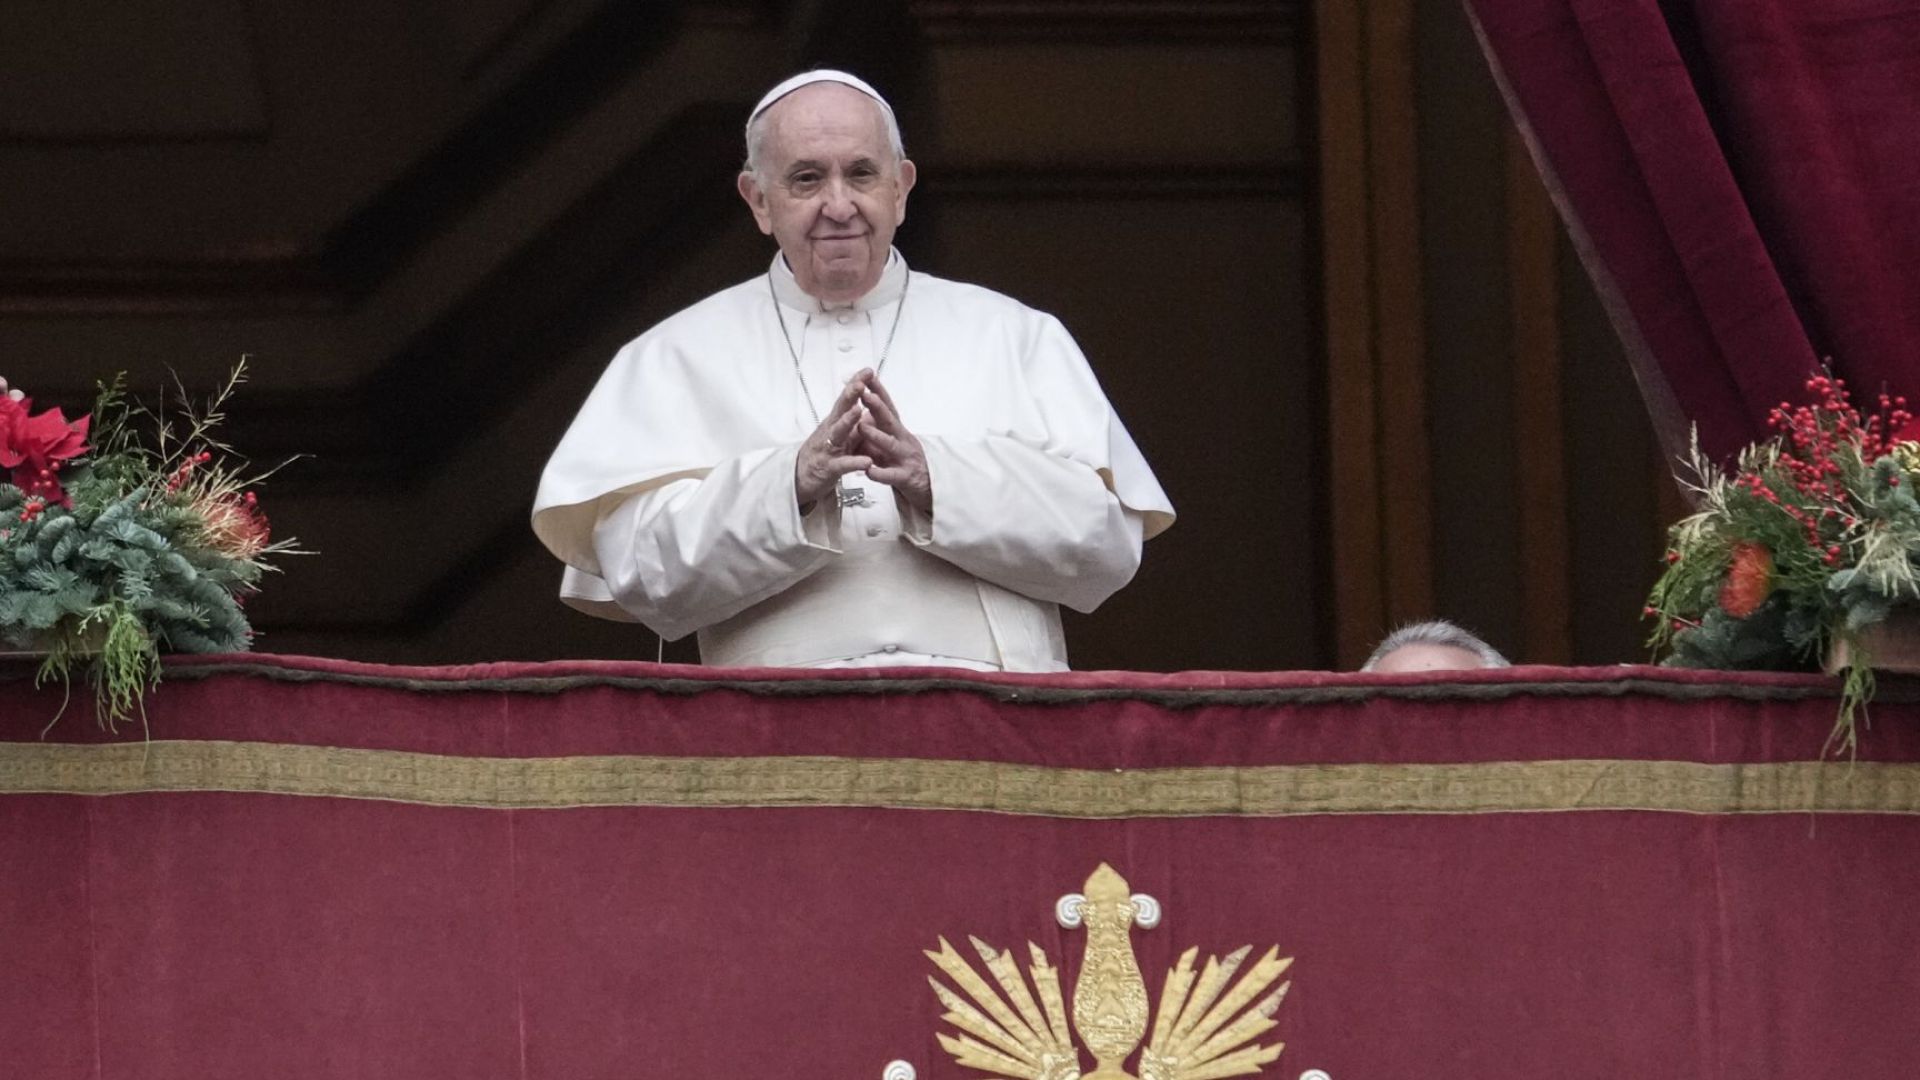 Папата отправи остро предупреждение срещу порнографията